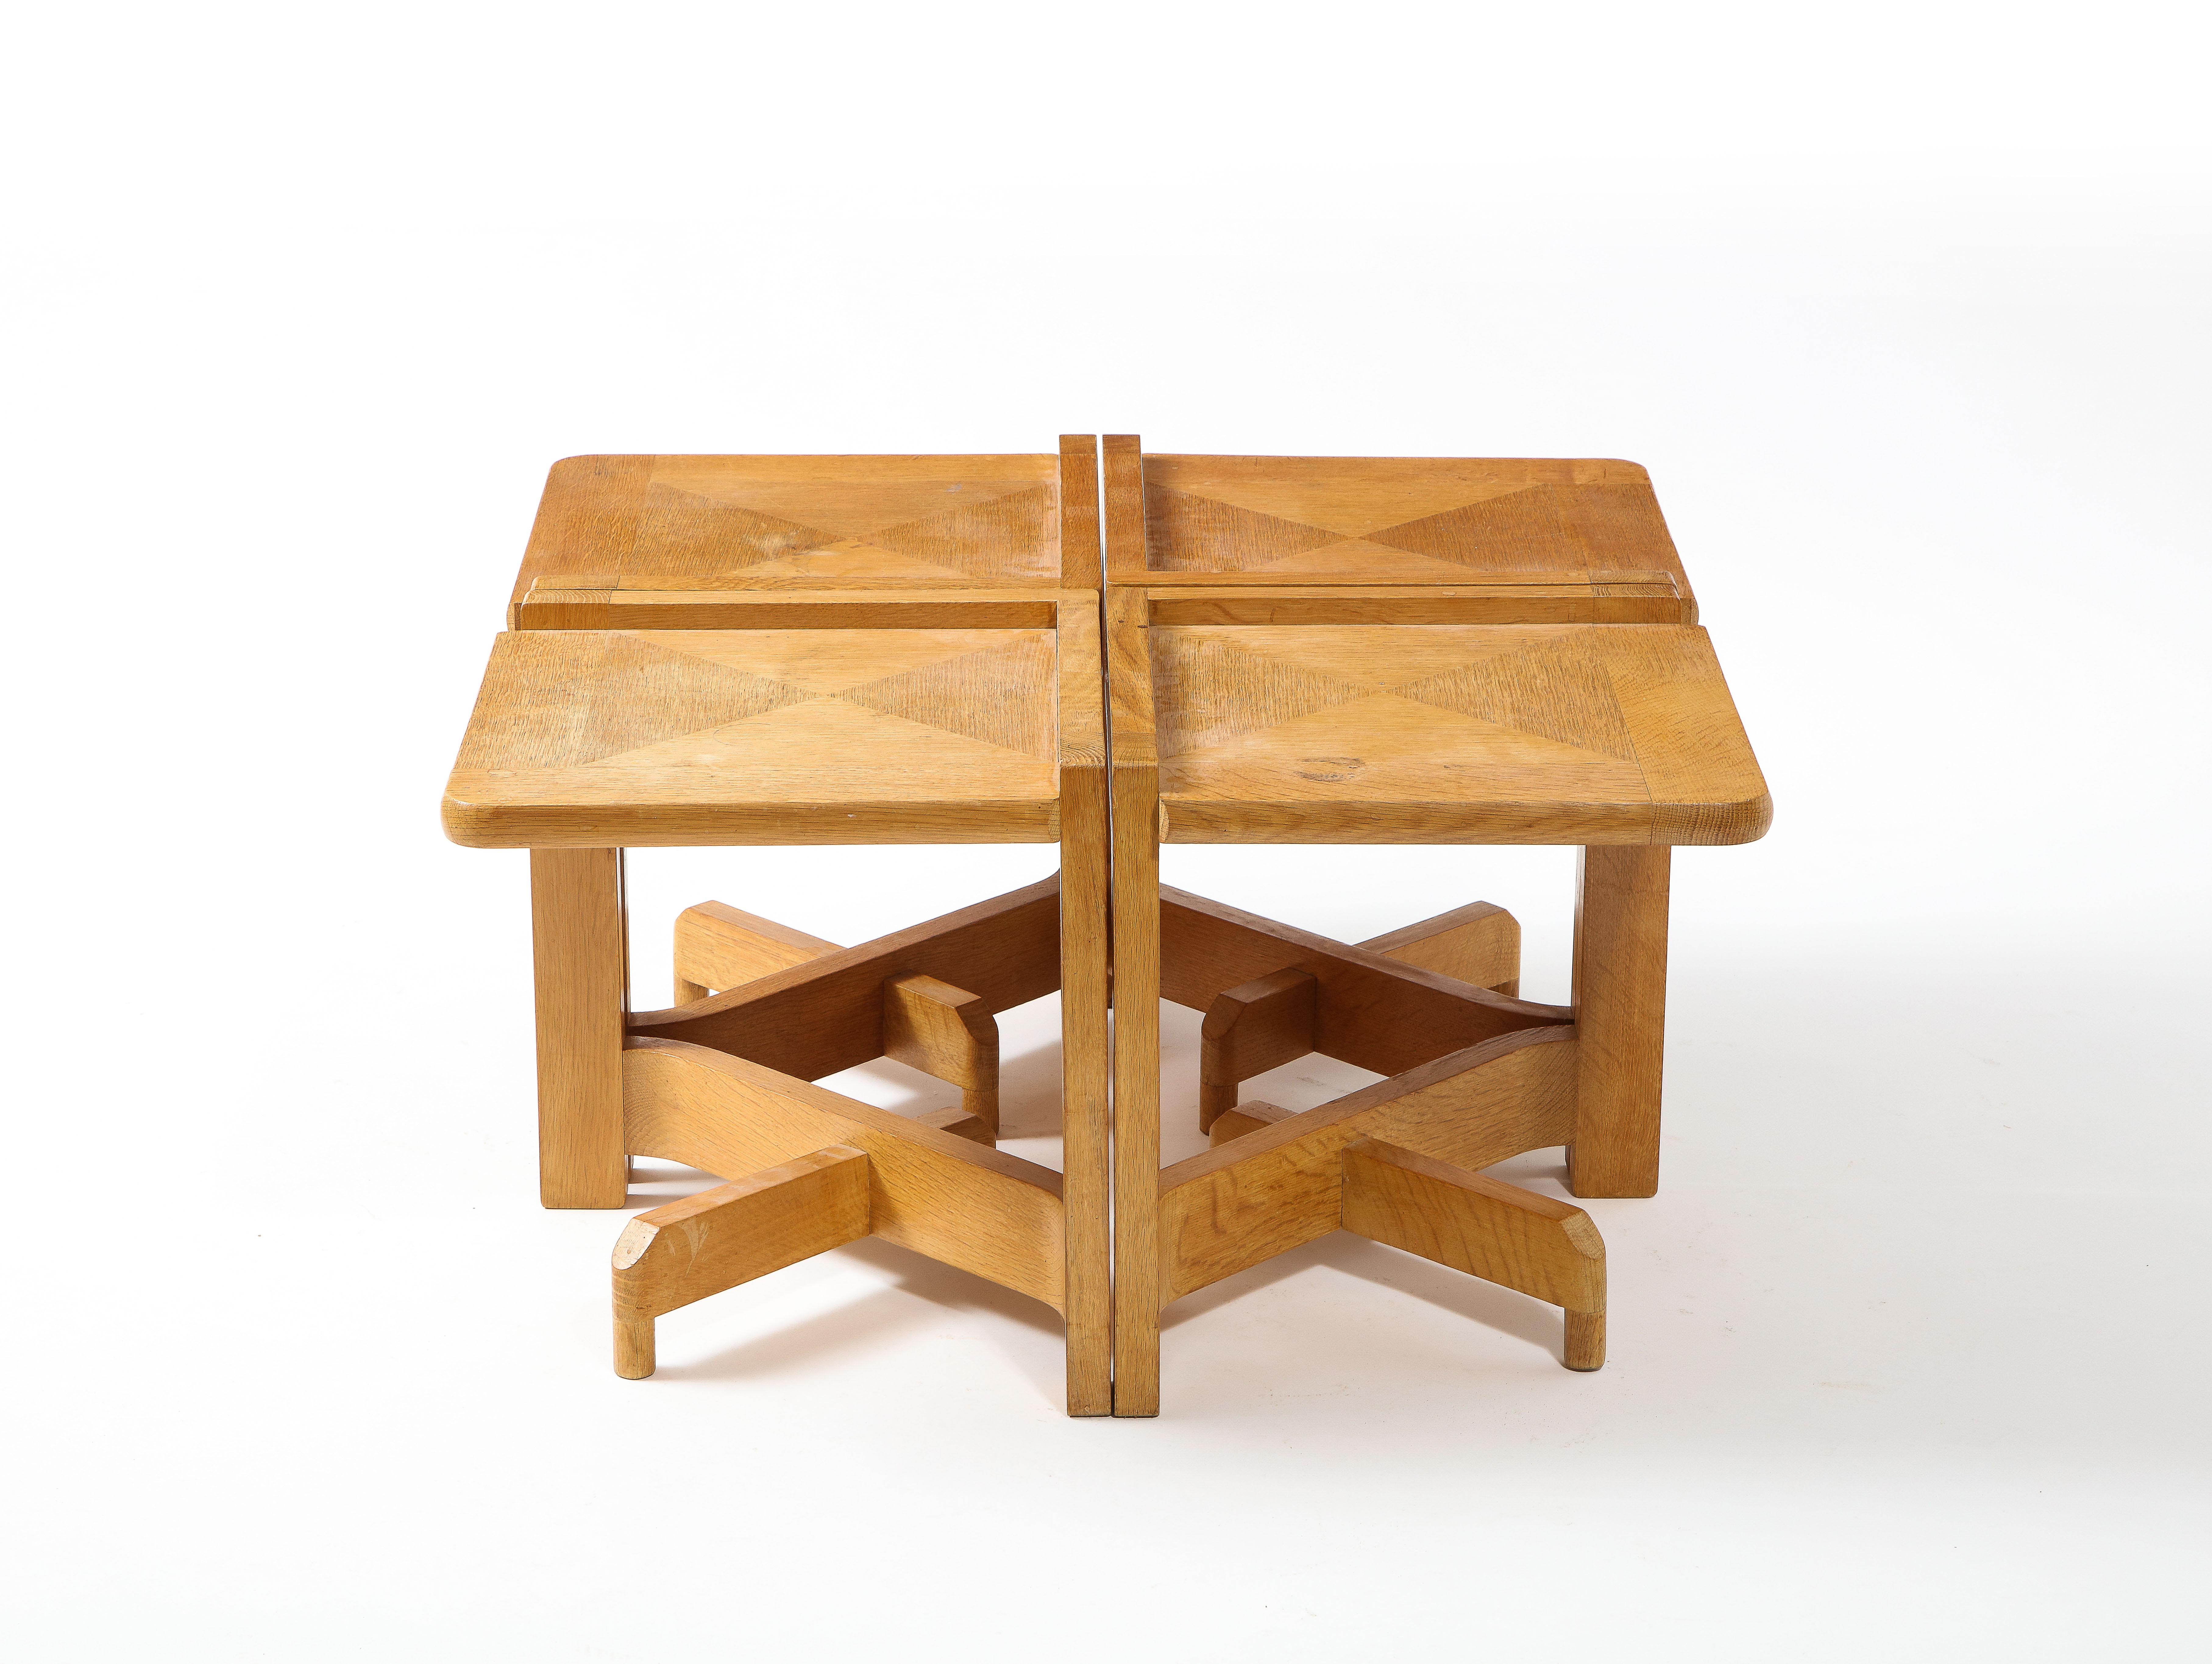 Guillerme & Chambron Oak End Tables, France 1950's For Sale 1